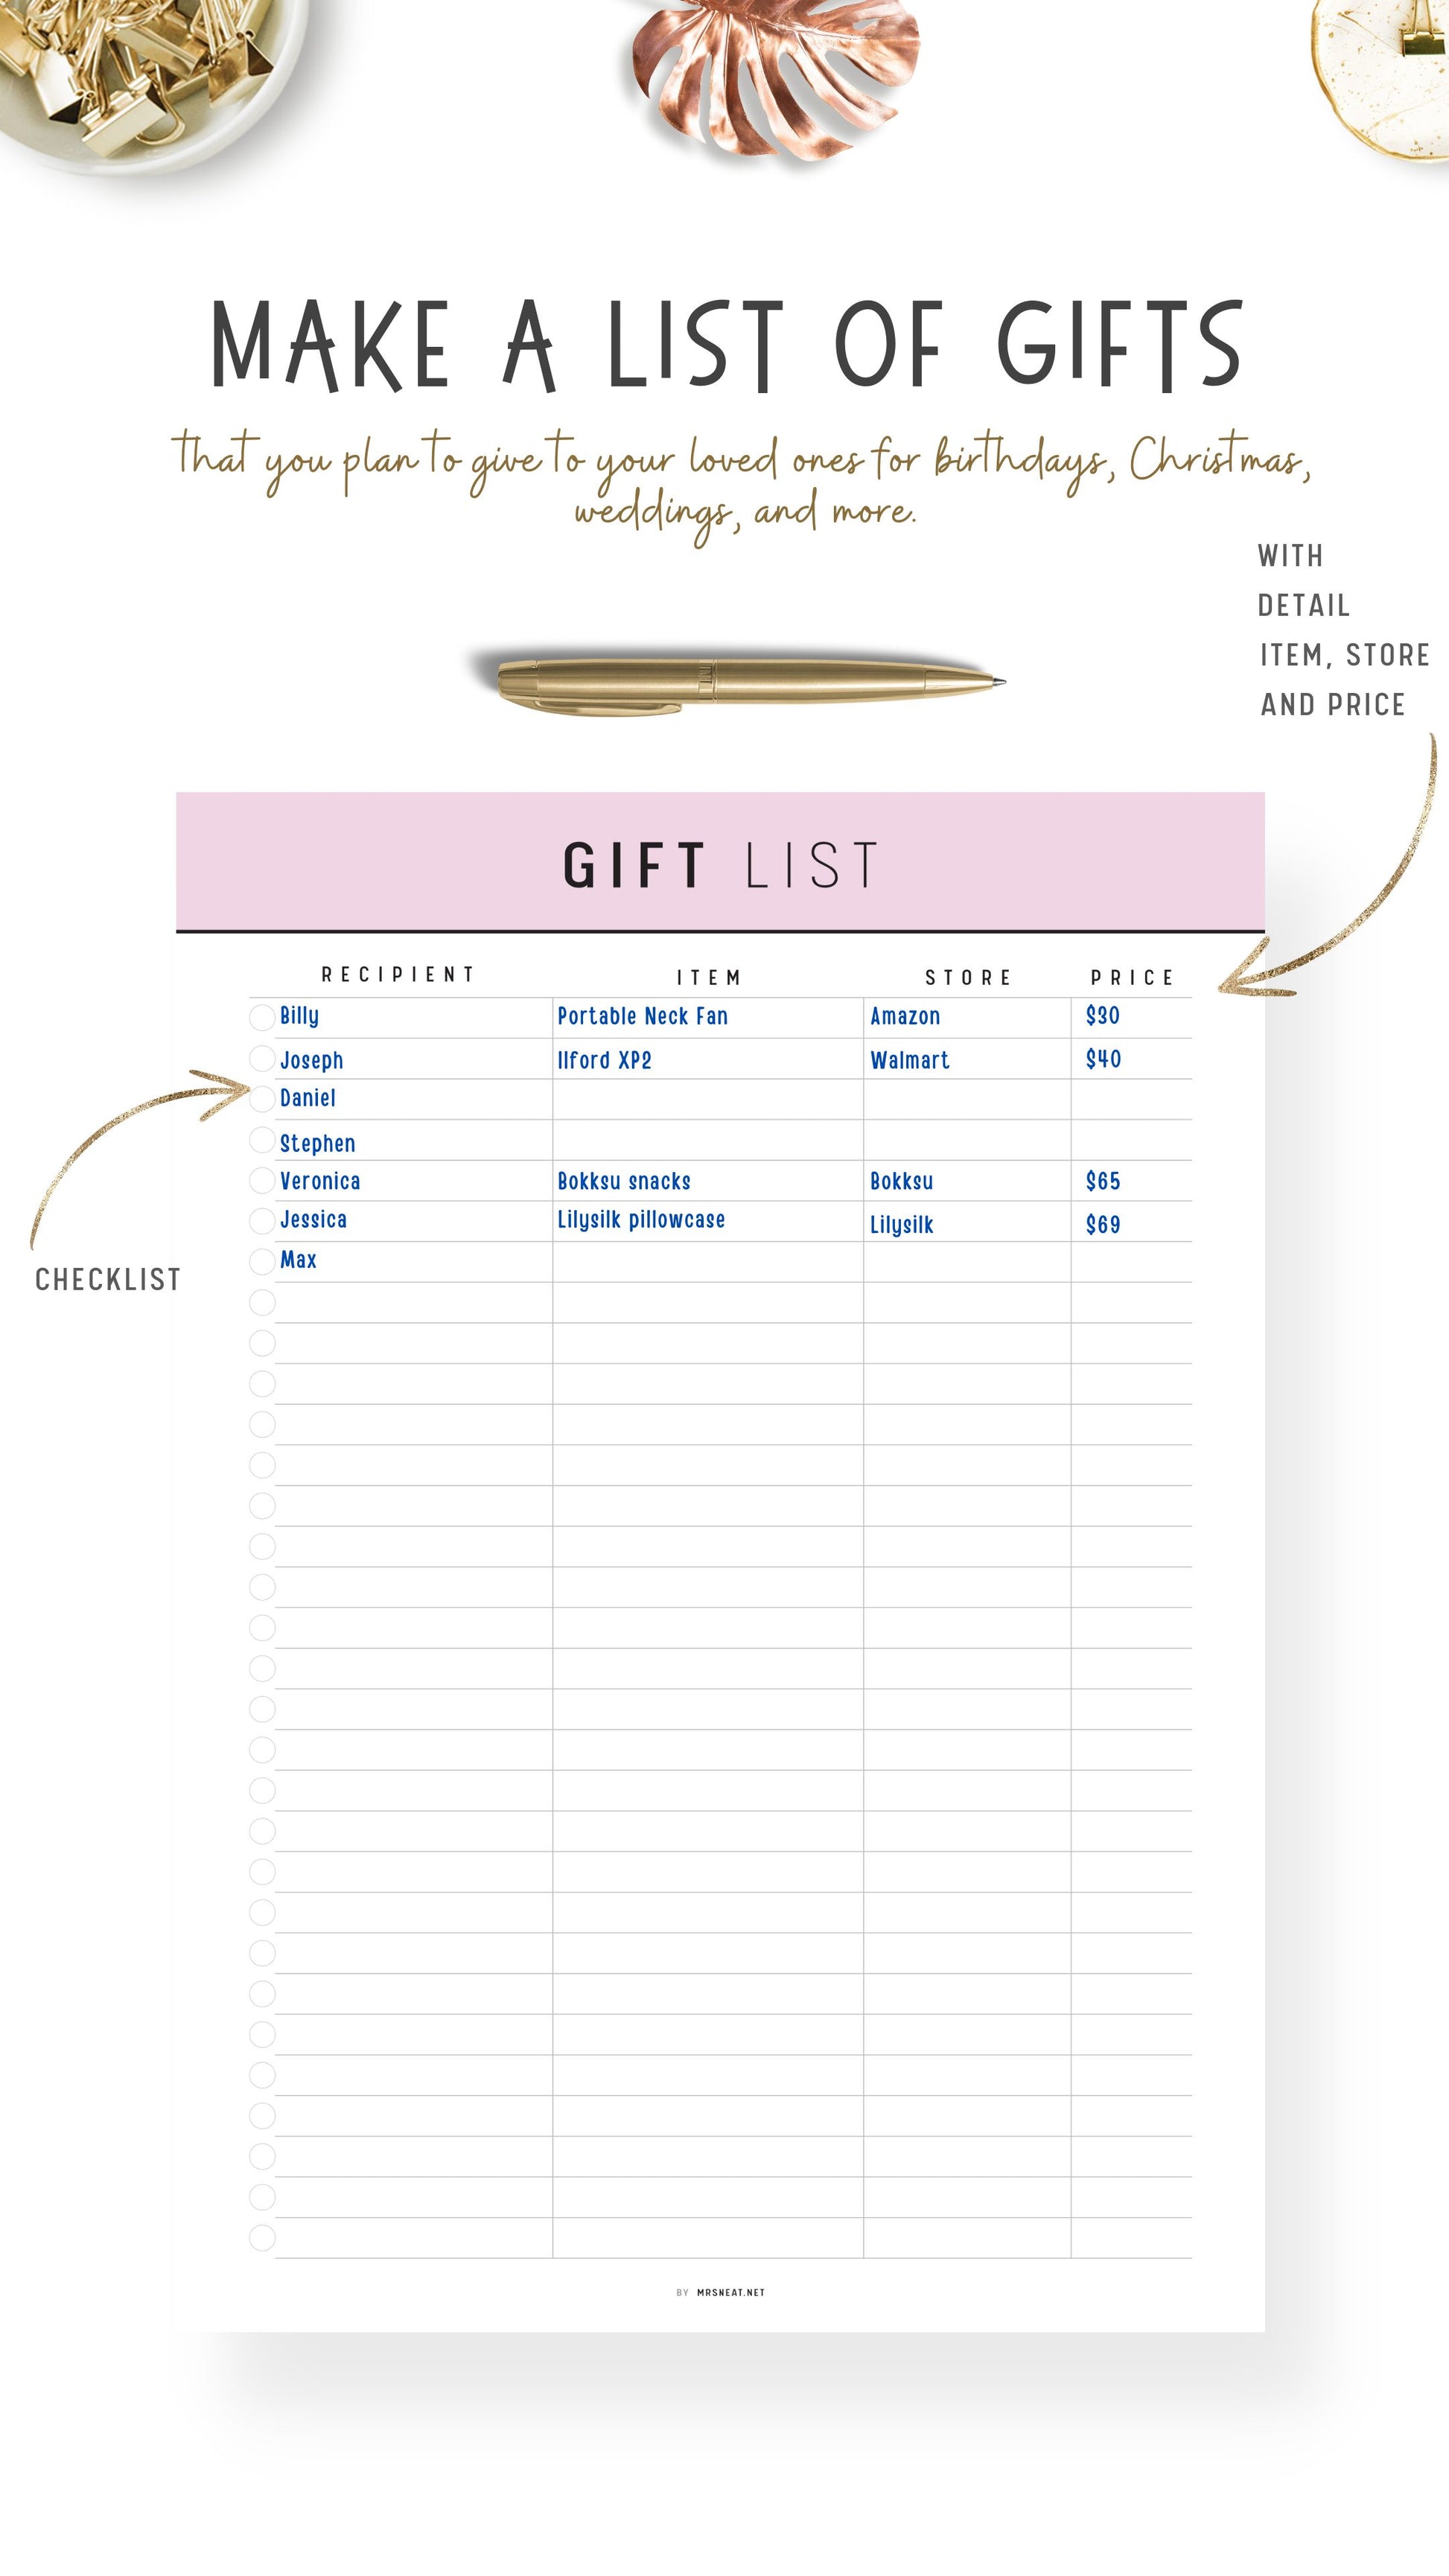 Gift List Template for Christmas